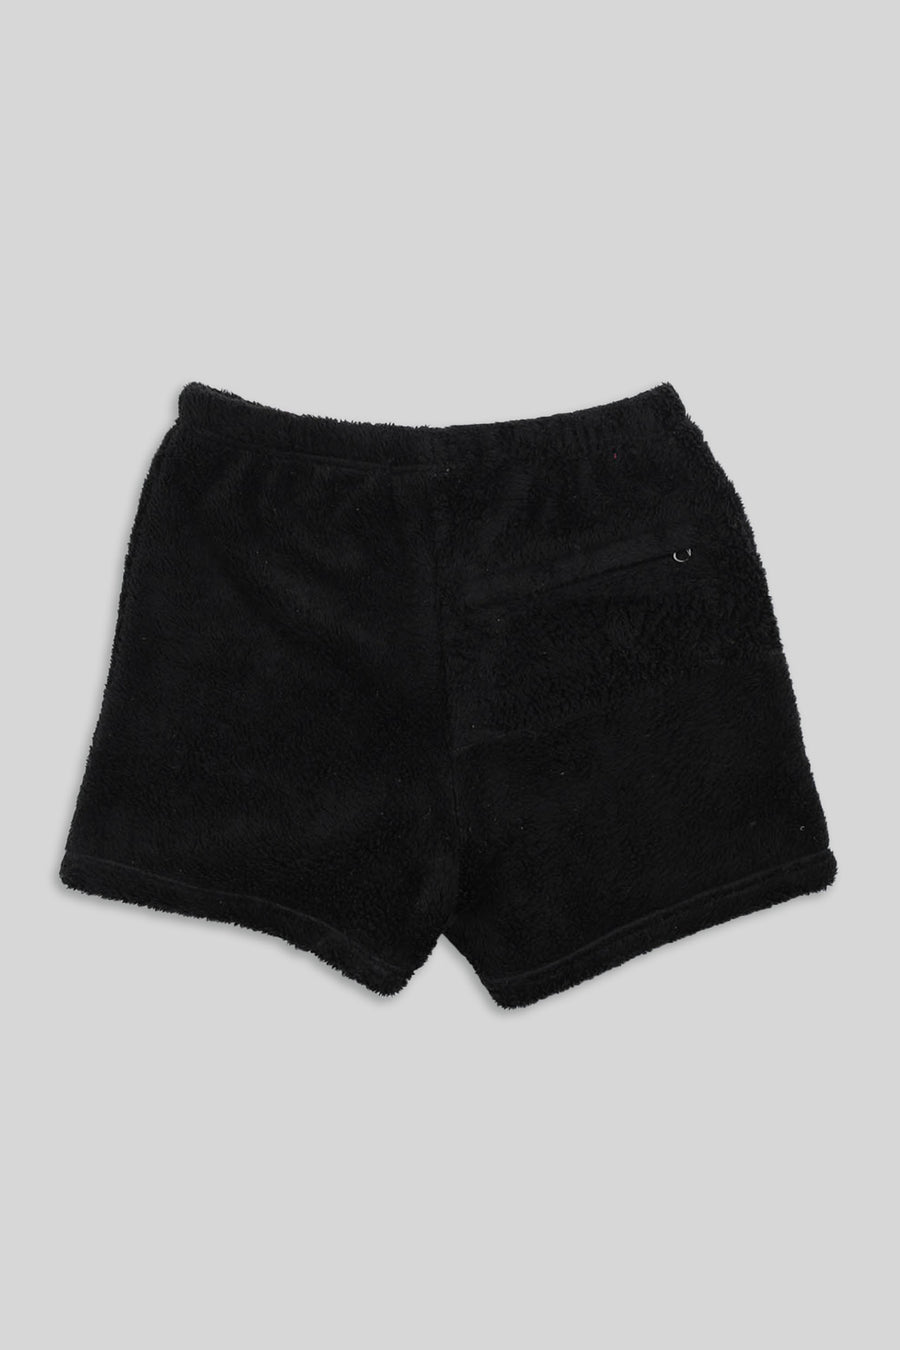 Rework North Face Fuzzy Shorts - XS, S, M, L, XL